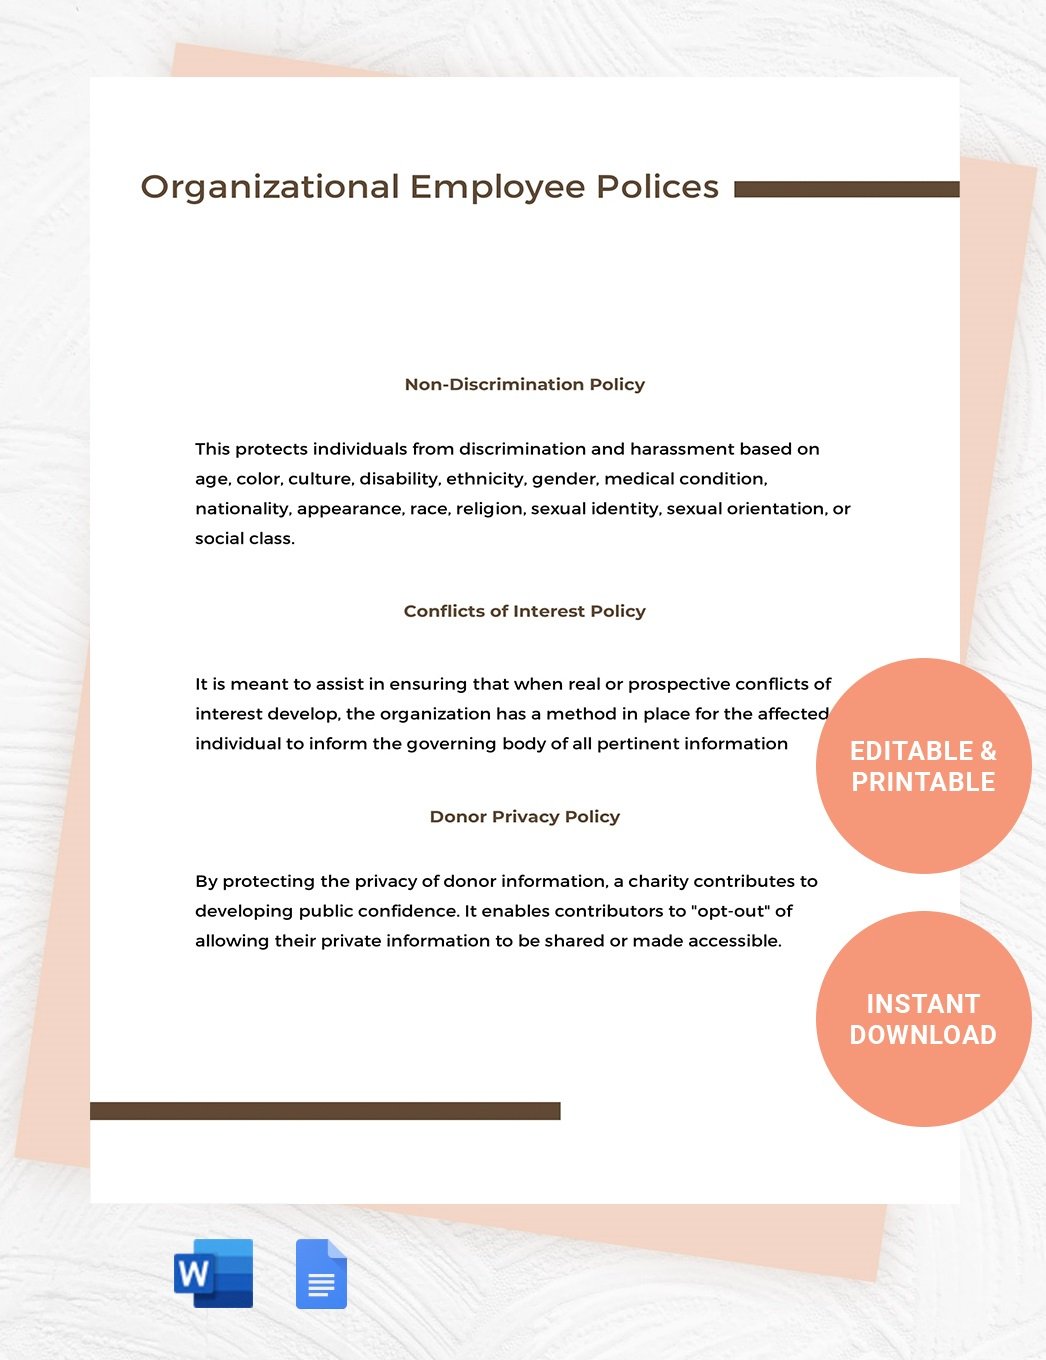 Non Profit Employee Handbook Template